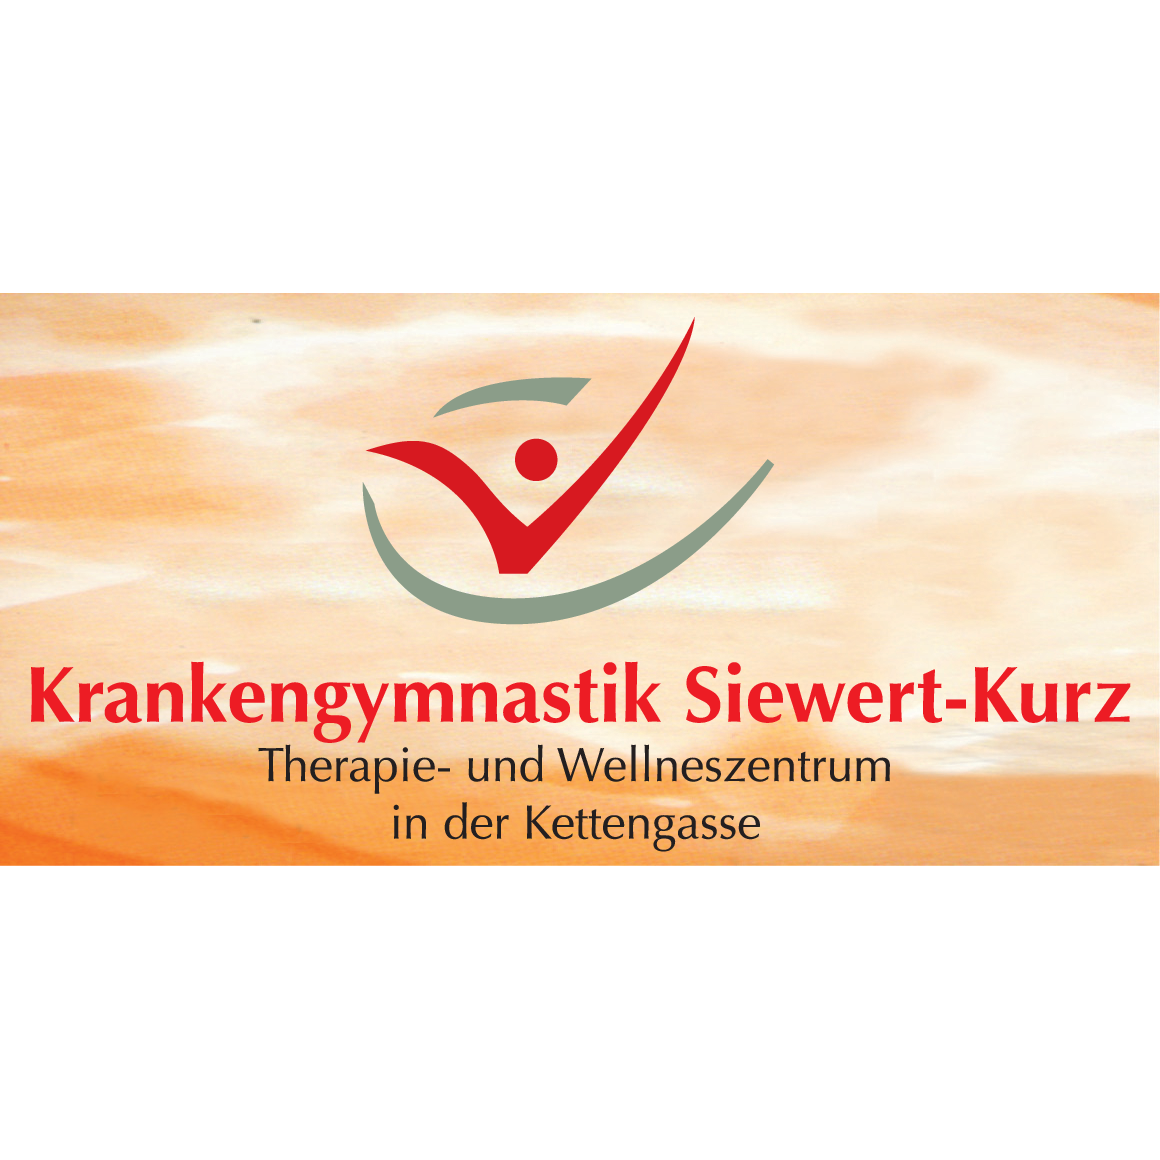 Krankengymnastik Siewert-Kurz in Pegnitz - Logo